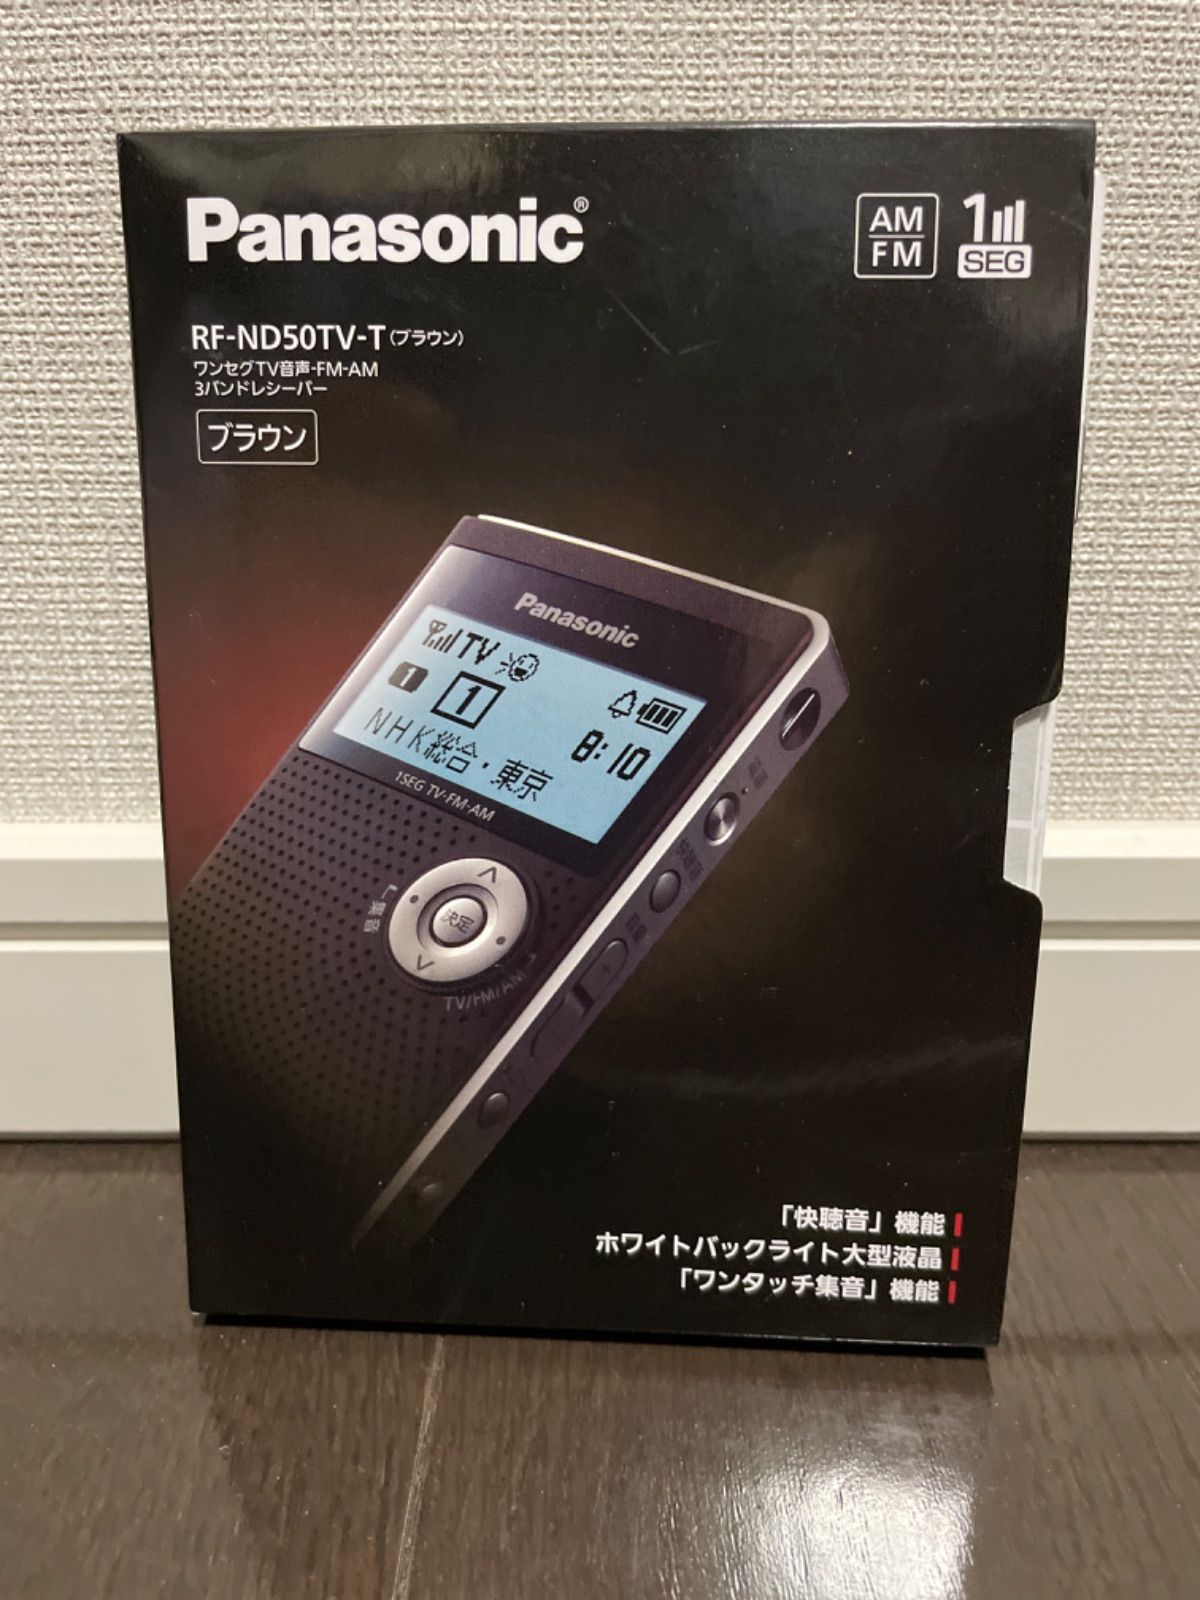 Panasonic RF-ND50TV-T ワンセグTV音声FM AM 3バンド - ラジオ